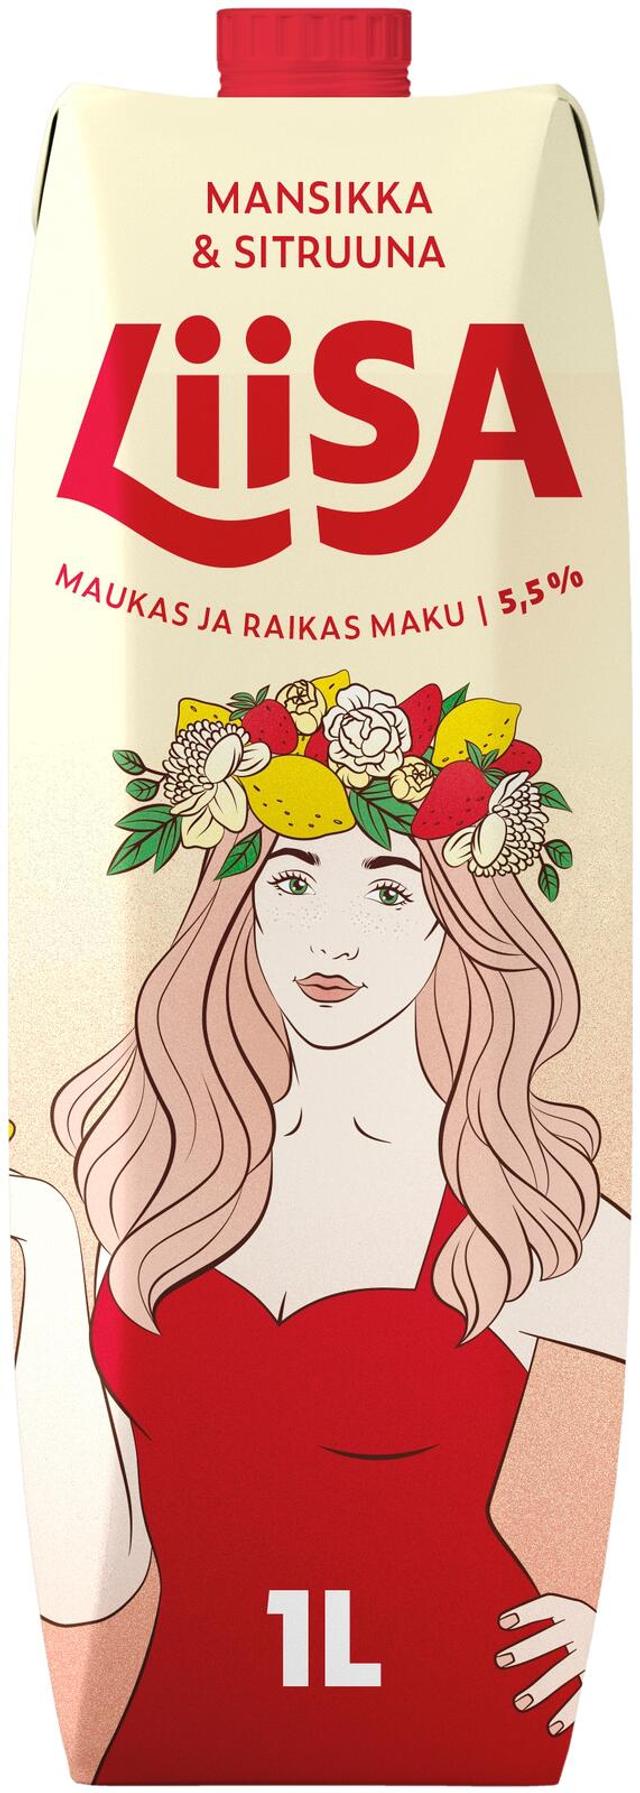 Liisa Mansikka & Sitruuna viinijuoma 5,5 % 1l